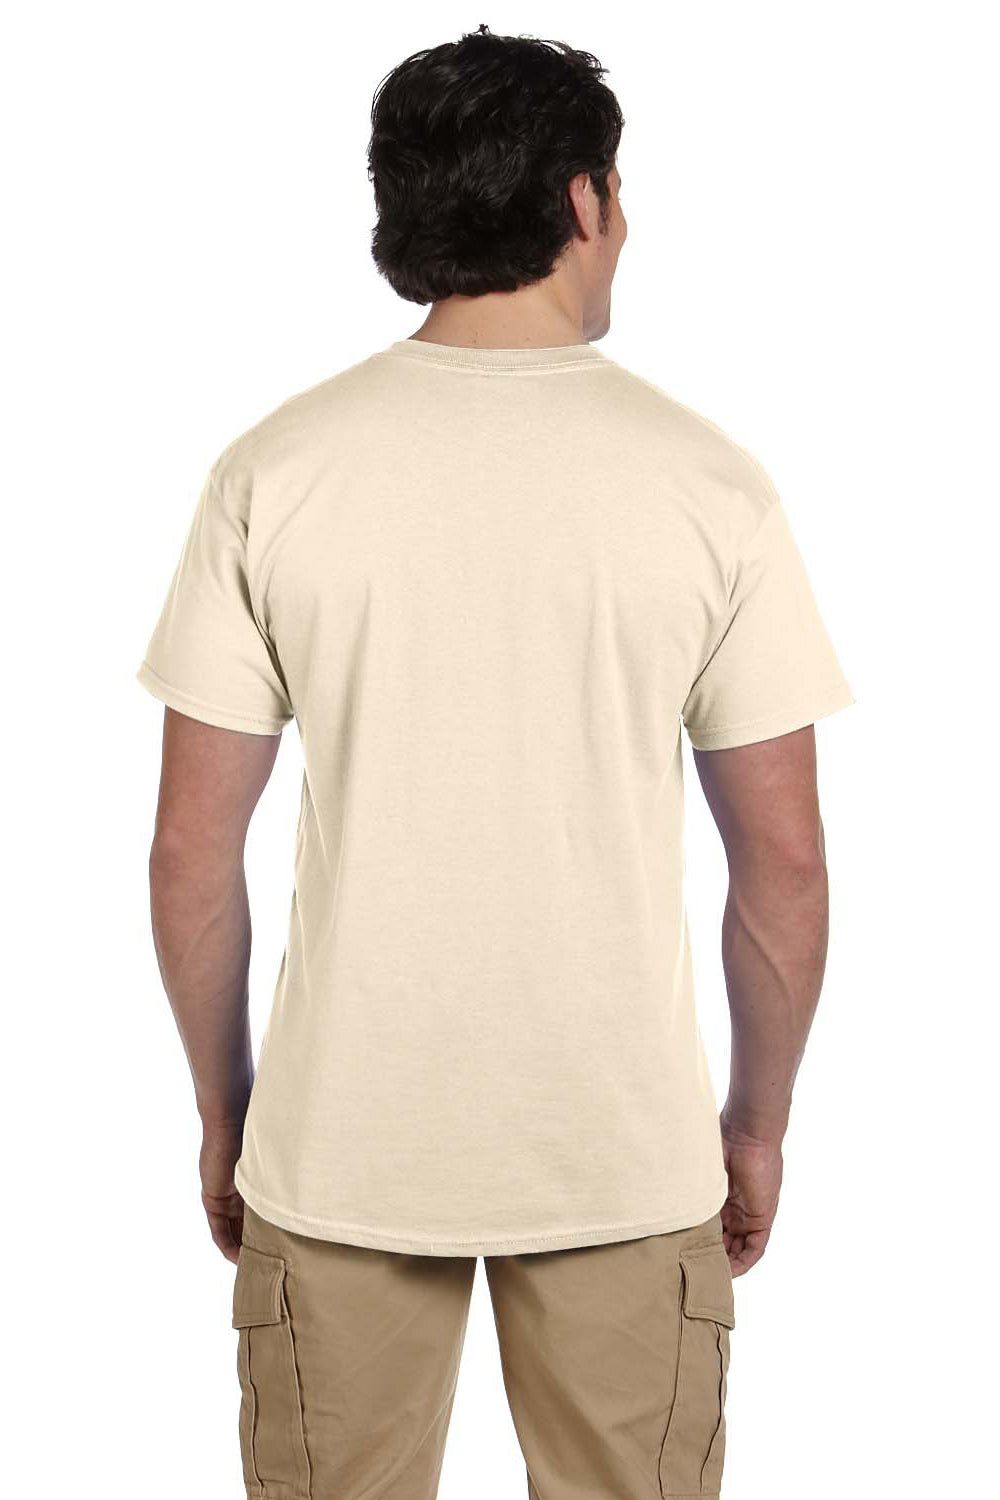 Fruit Of The Loom 3931 Mens HD Jersey Short Sleeve Crewneck T-Shirt Natural Back